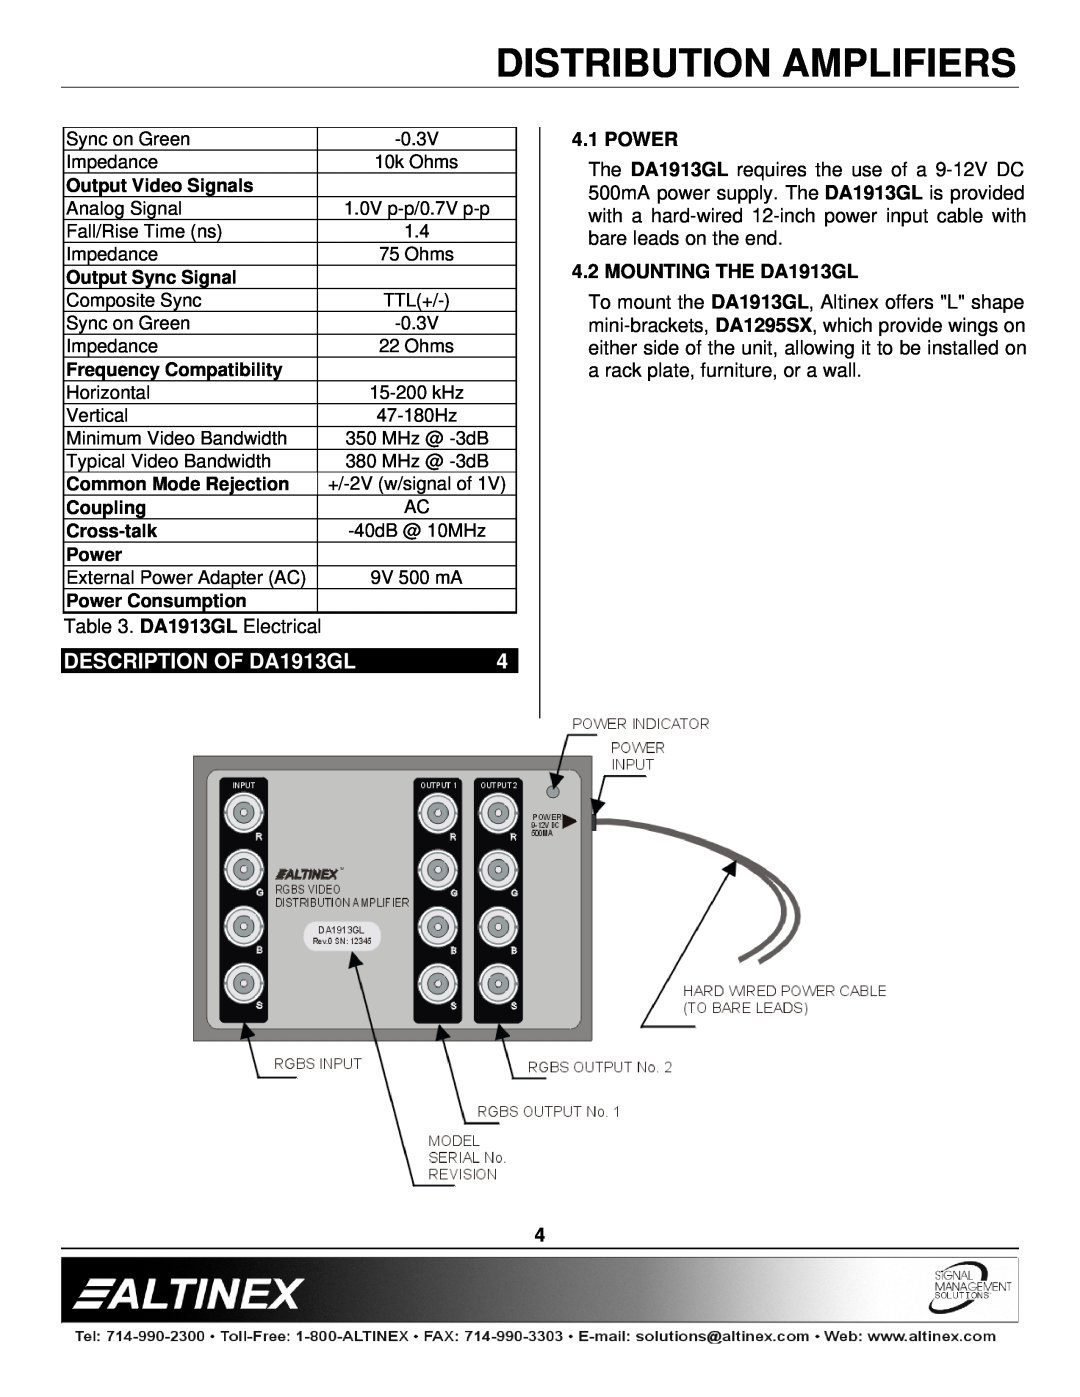 Altinex manual DESCRIPTION OF DA1913GL, Power, MOUNTING THE DA1913GL, Distribution Amplifiers 